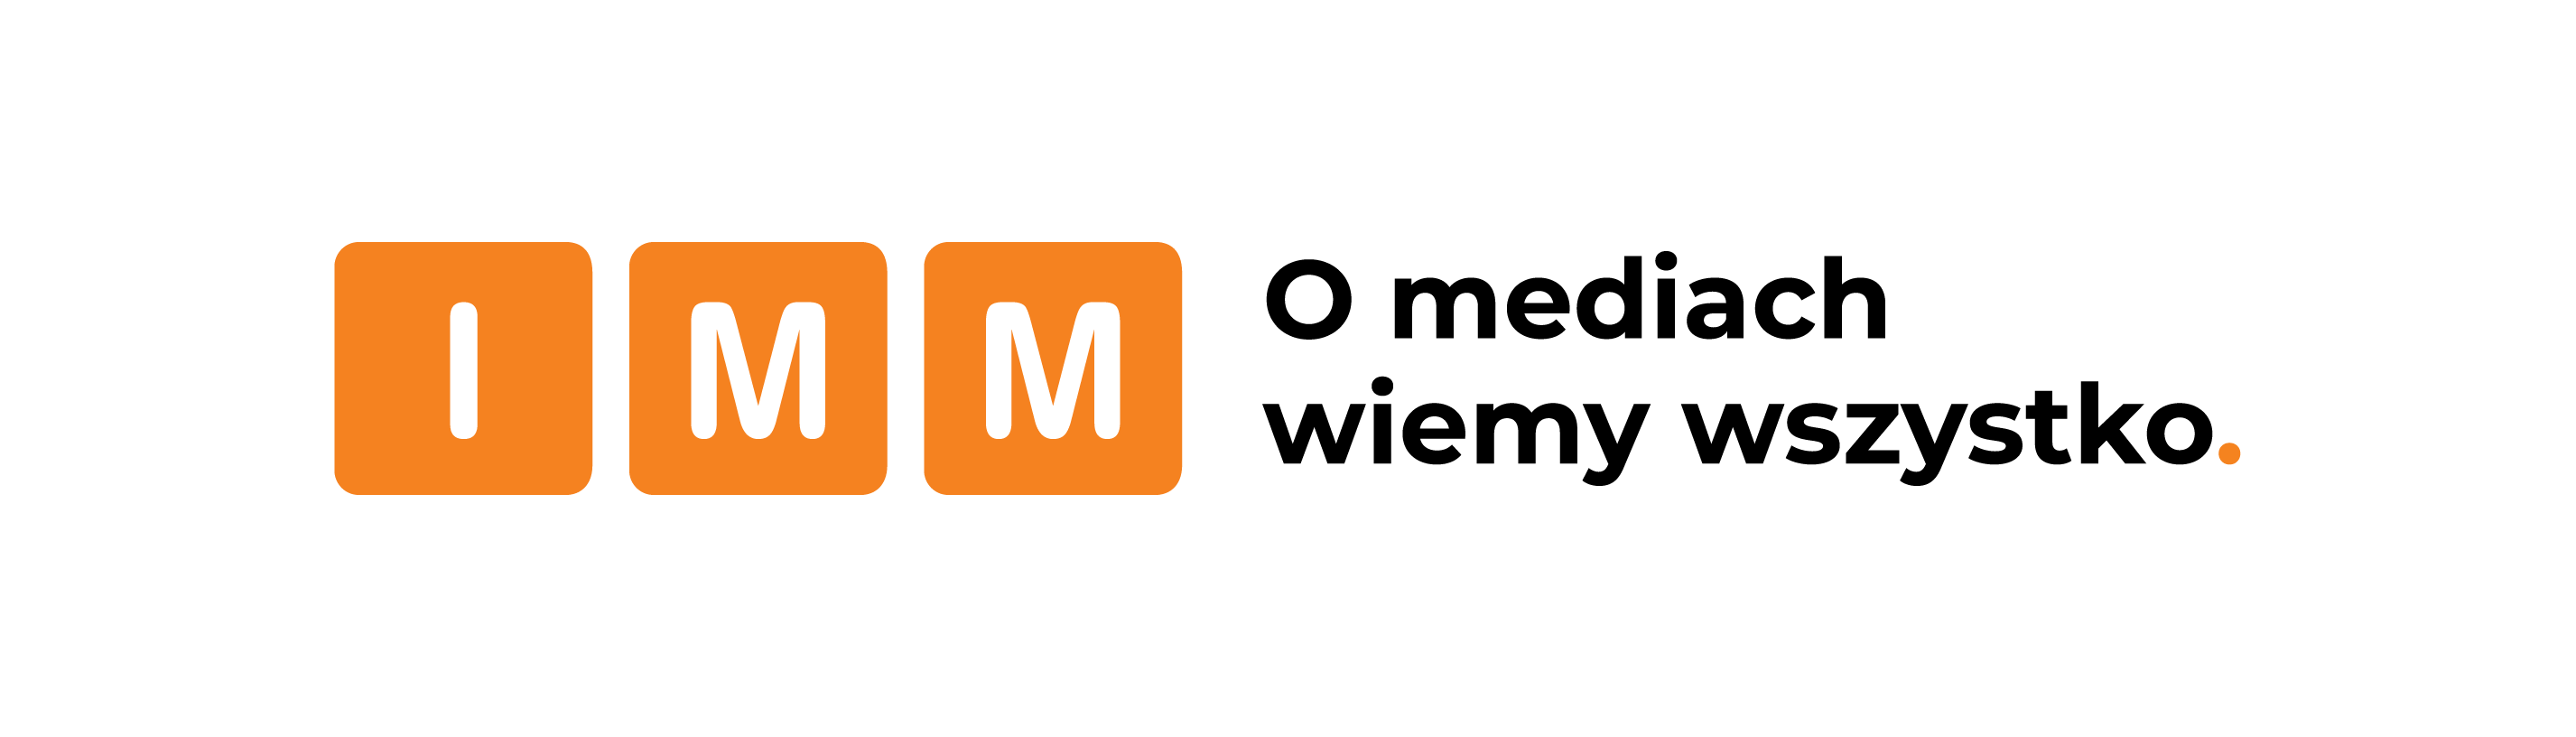 logo_imm_orange_imm_omww